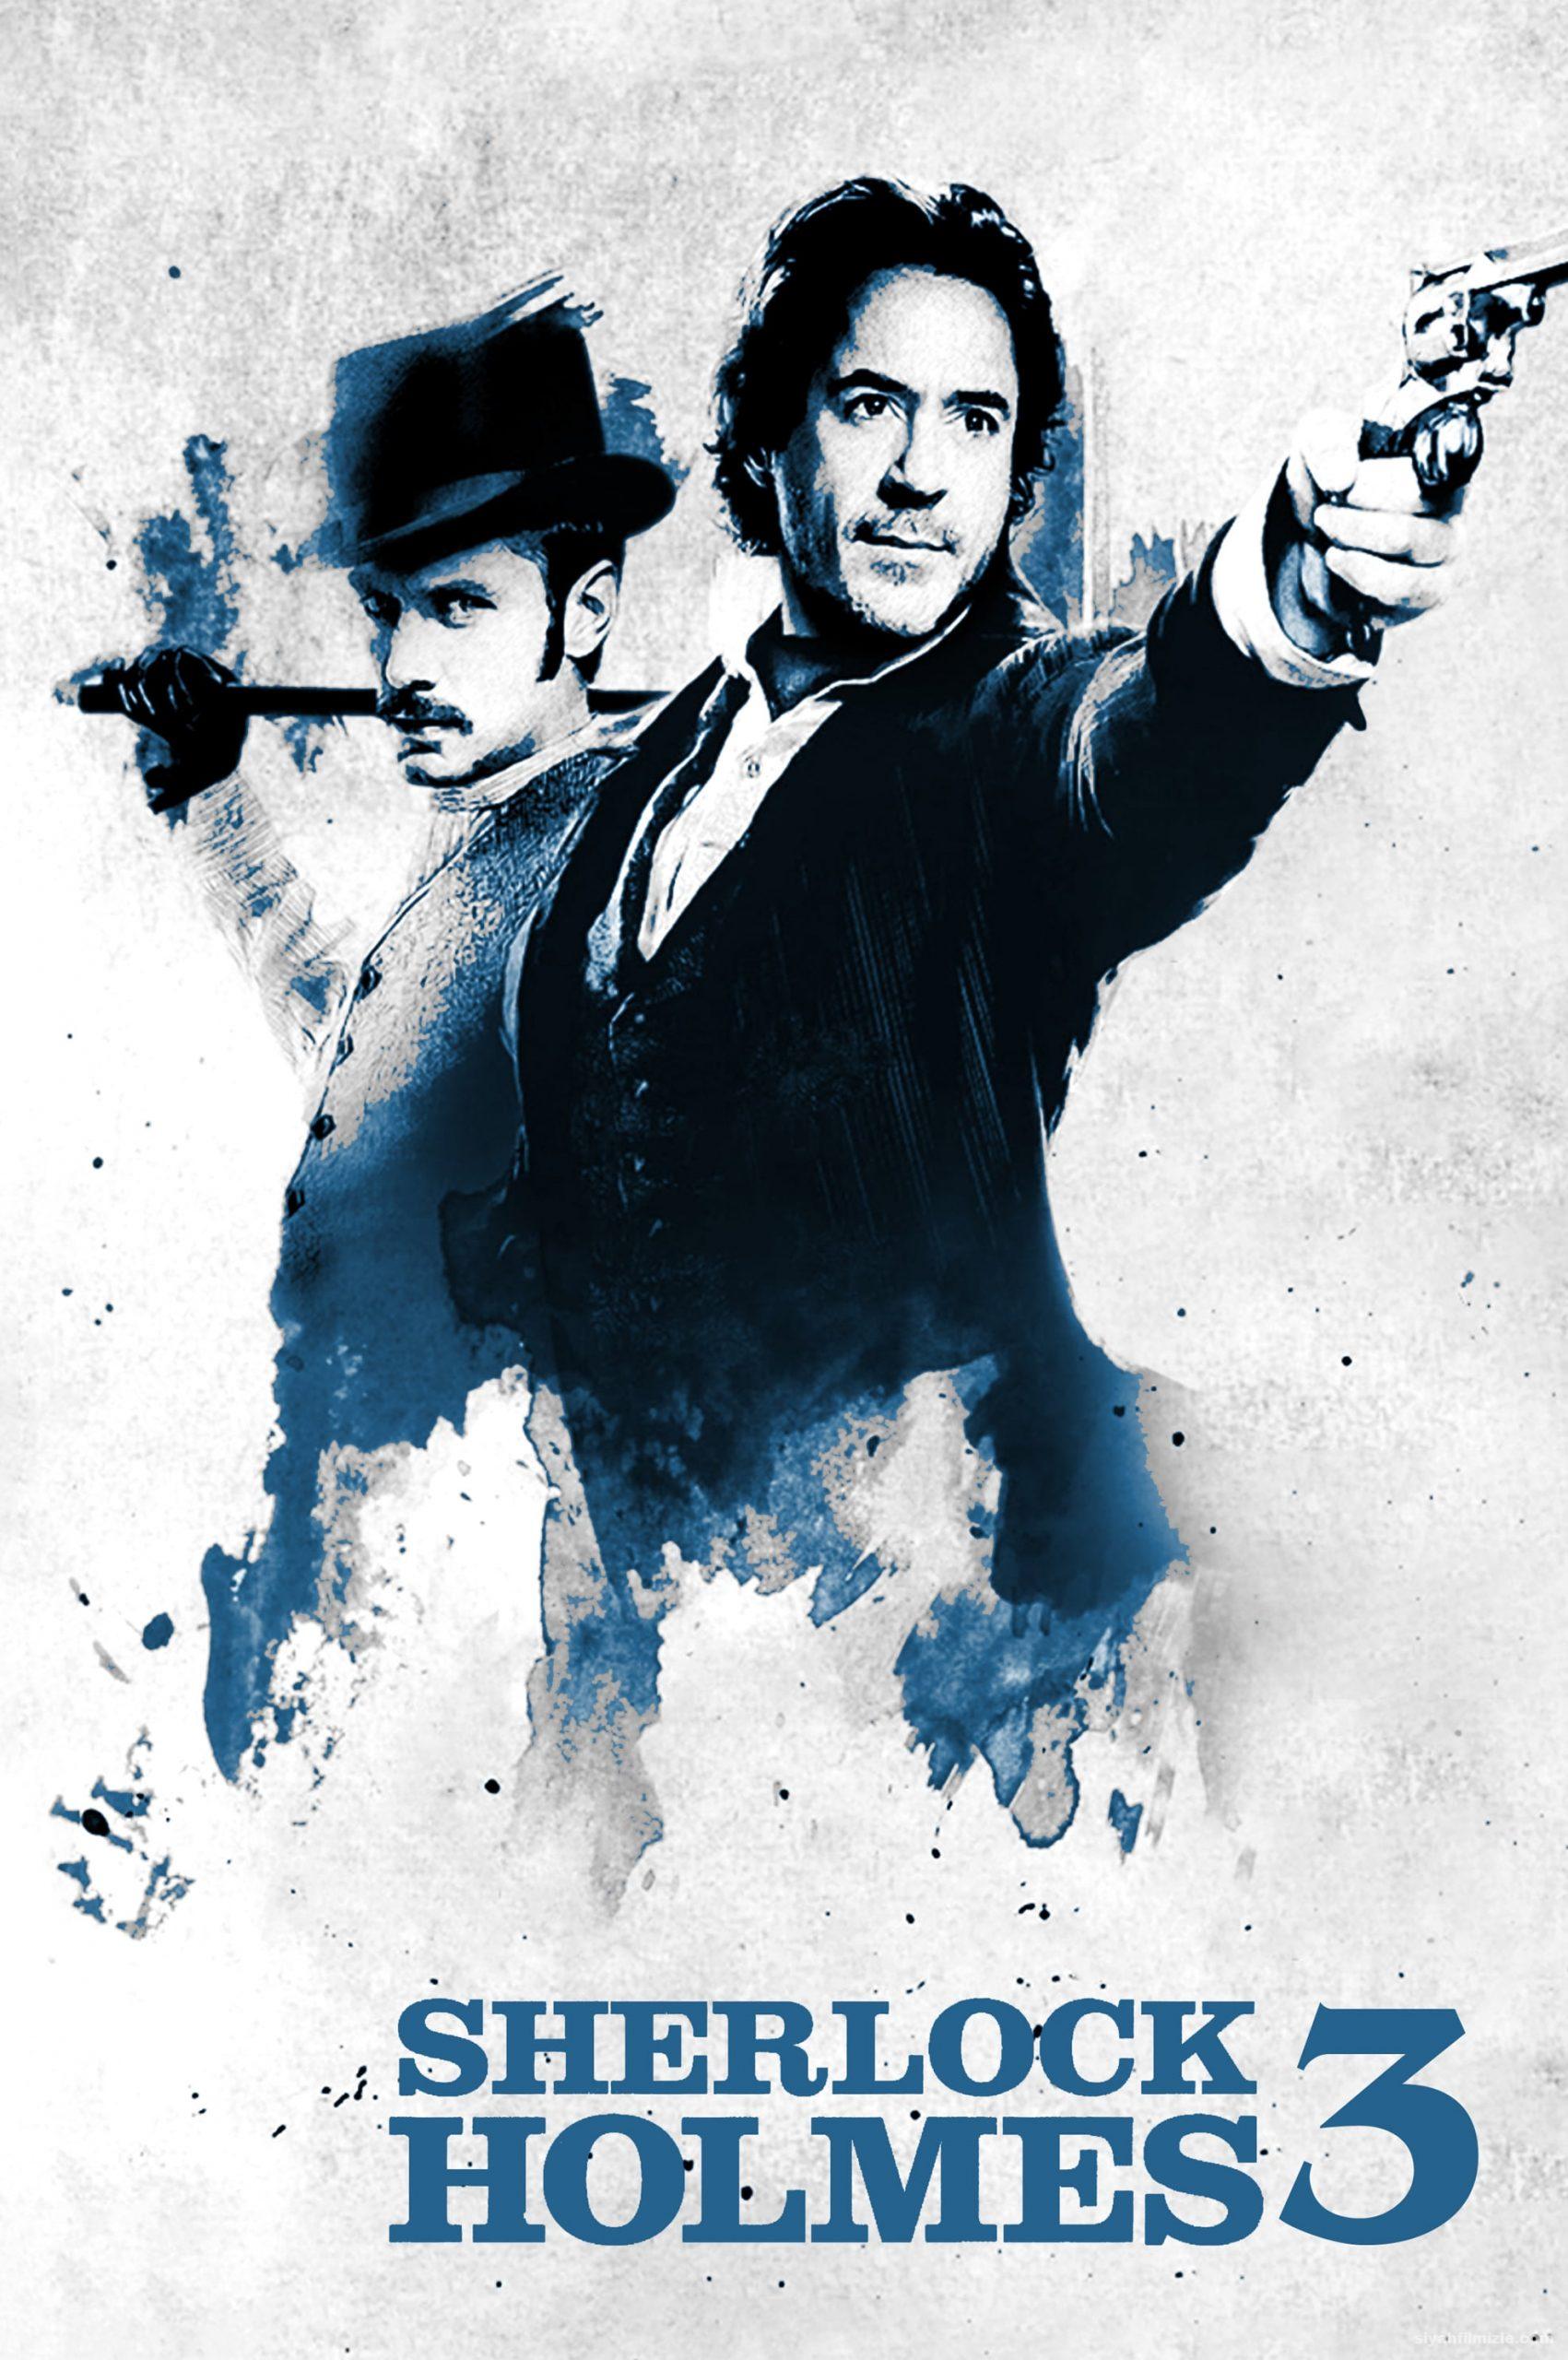 Sherlock Holmes 3 2021 Filmi Türkçe Dublaj Full izle